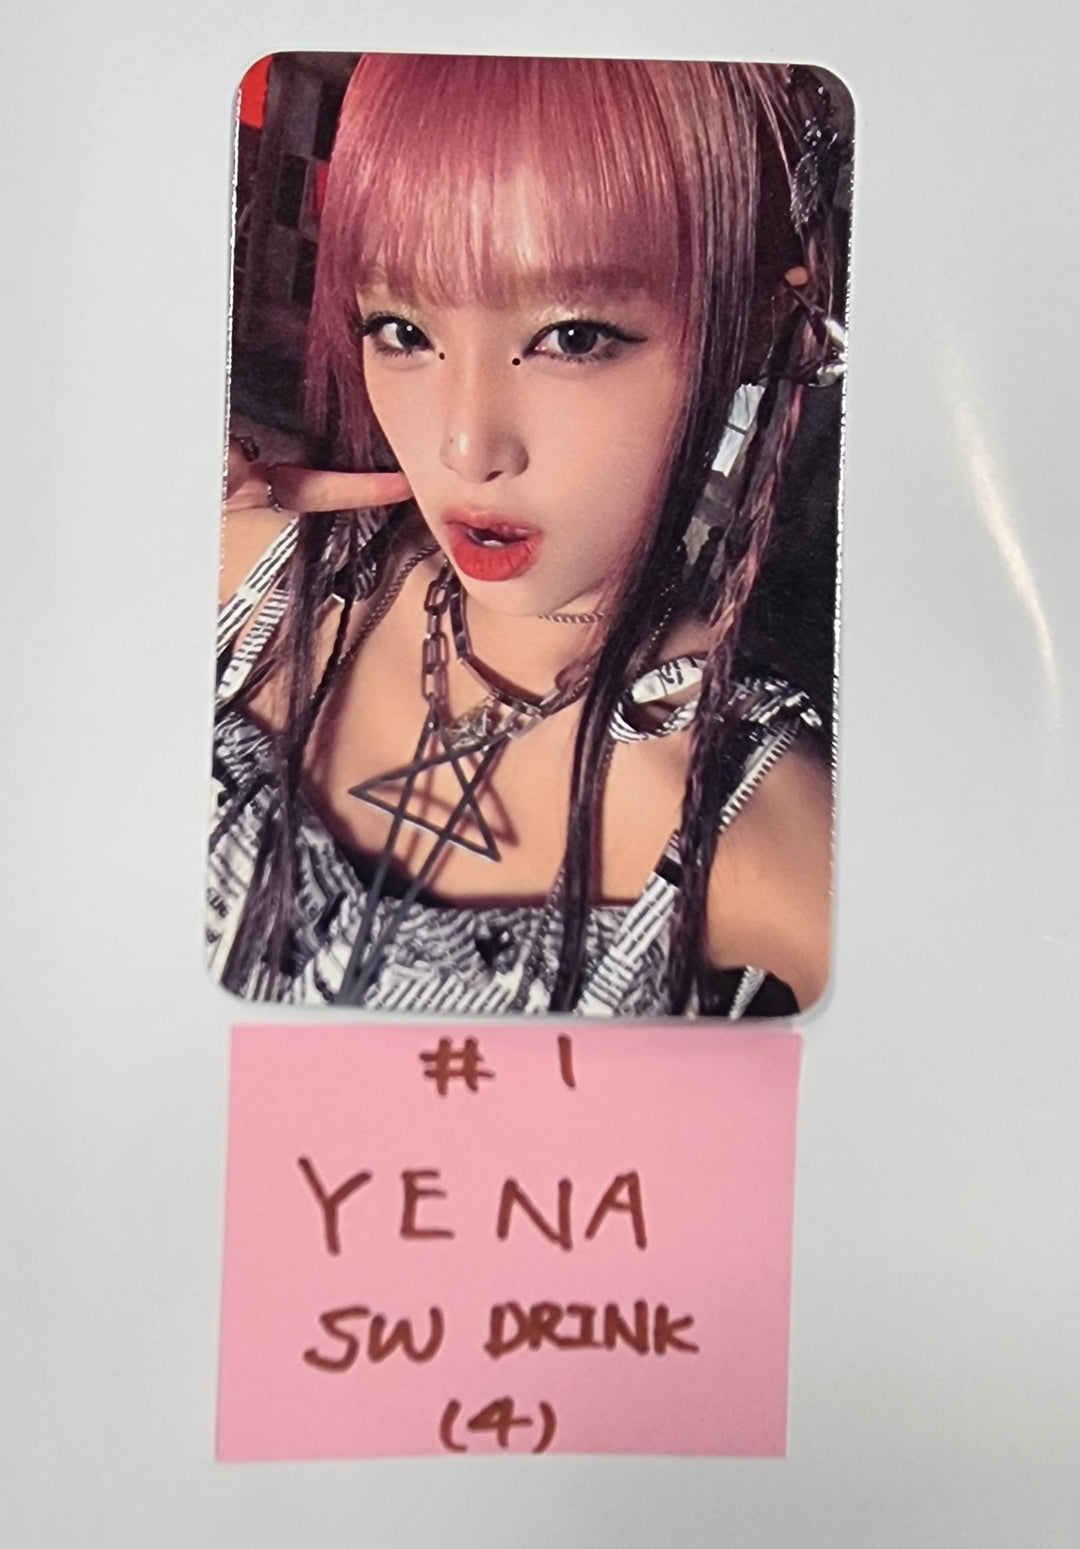 YENA 「Good Morning」 - Soundwave POP-UP Cafe Drink スペシャルイベントフォトカード [24.1.16]